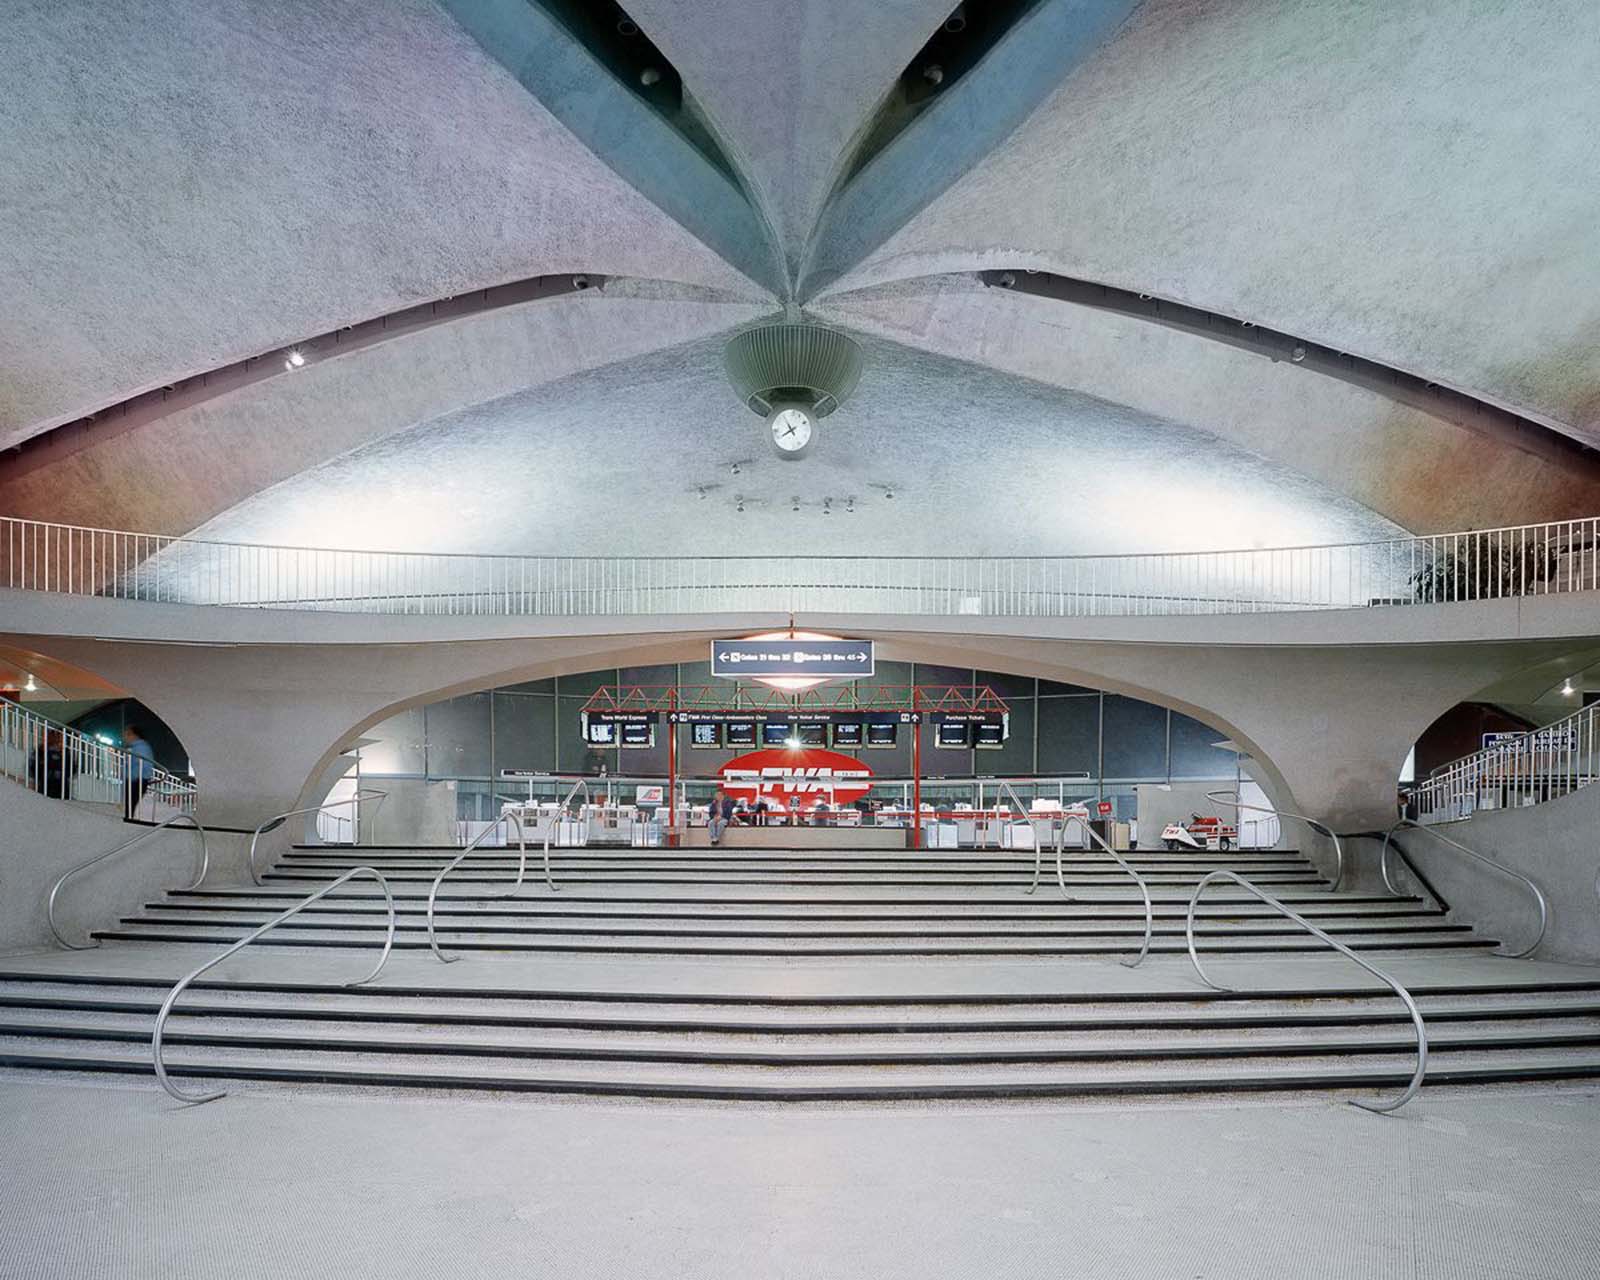 Stunning Vintage Photos of TWA flight Centre, New York City, 1962